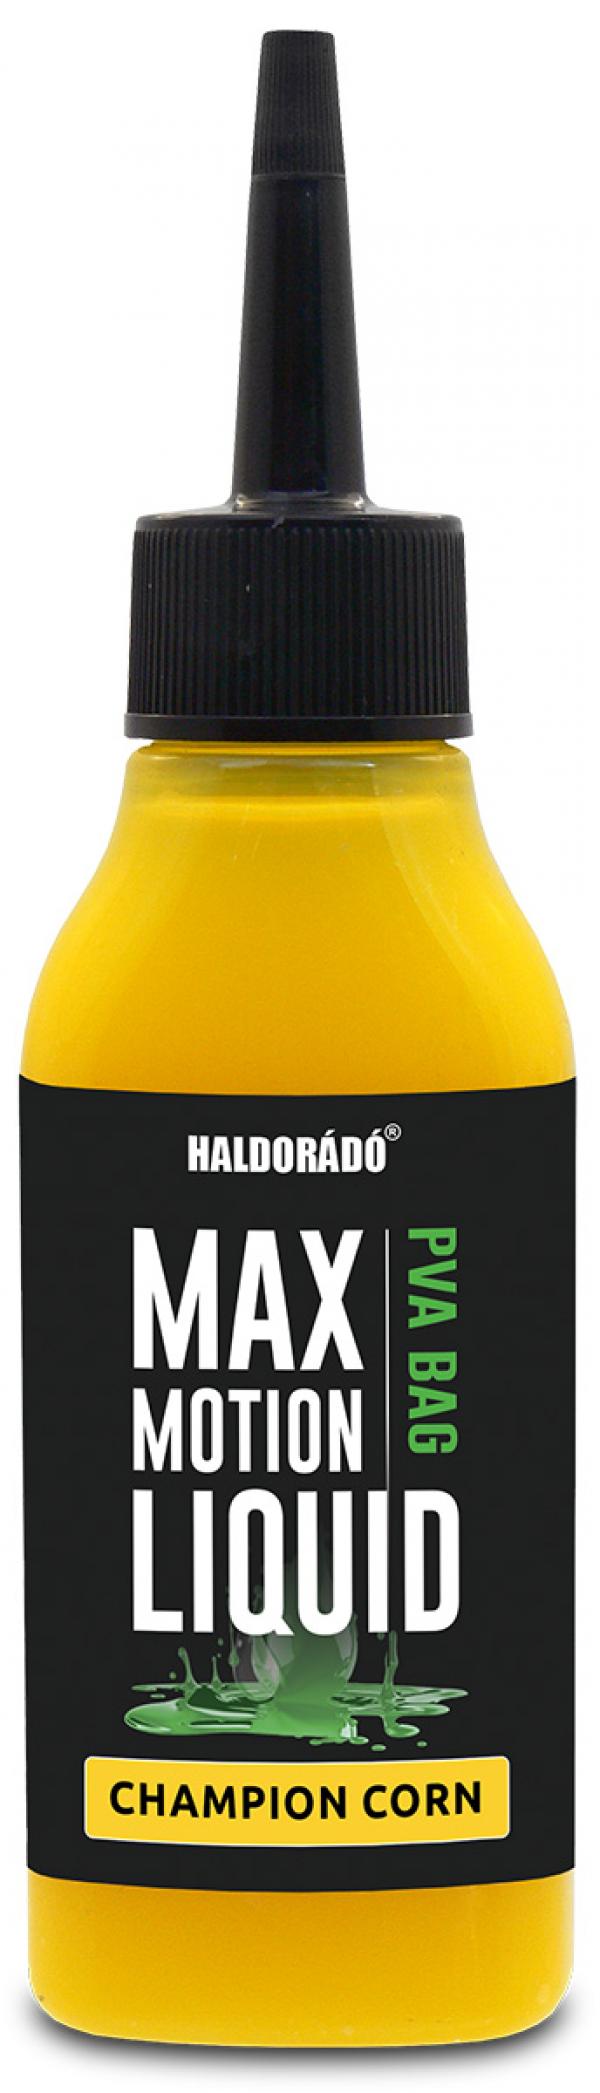 HALDORÁDÓ MAX MOTION PVA Bag Liquid - Champion Corn